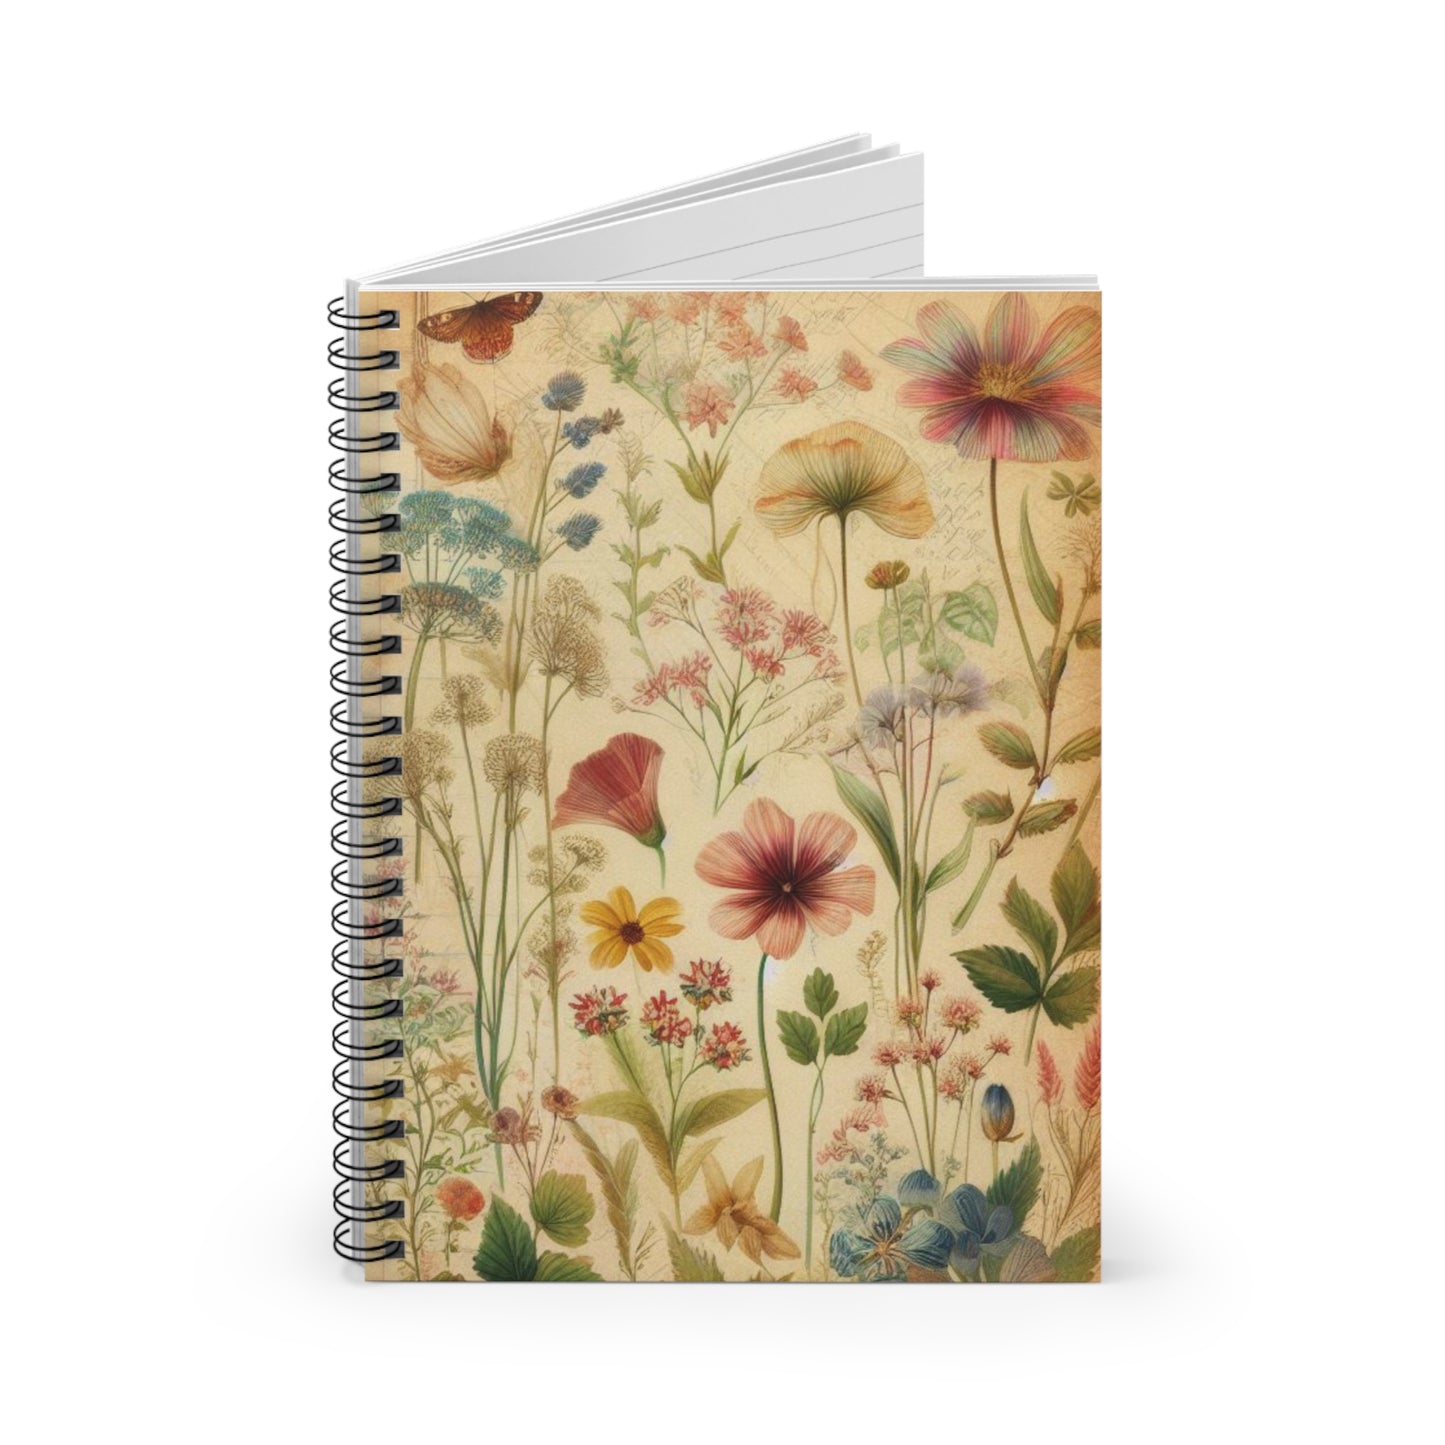 Floral Aged Paper Aesthetic Vintage Spiral Notebook